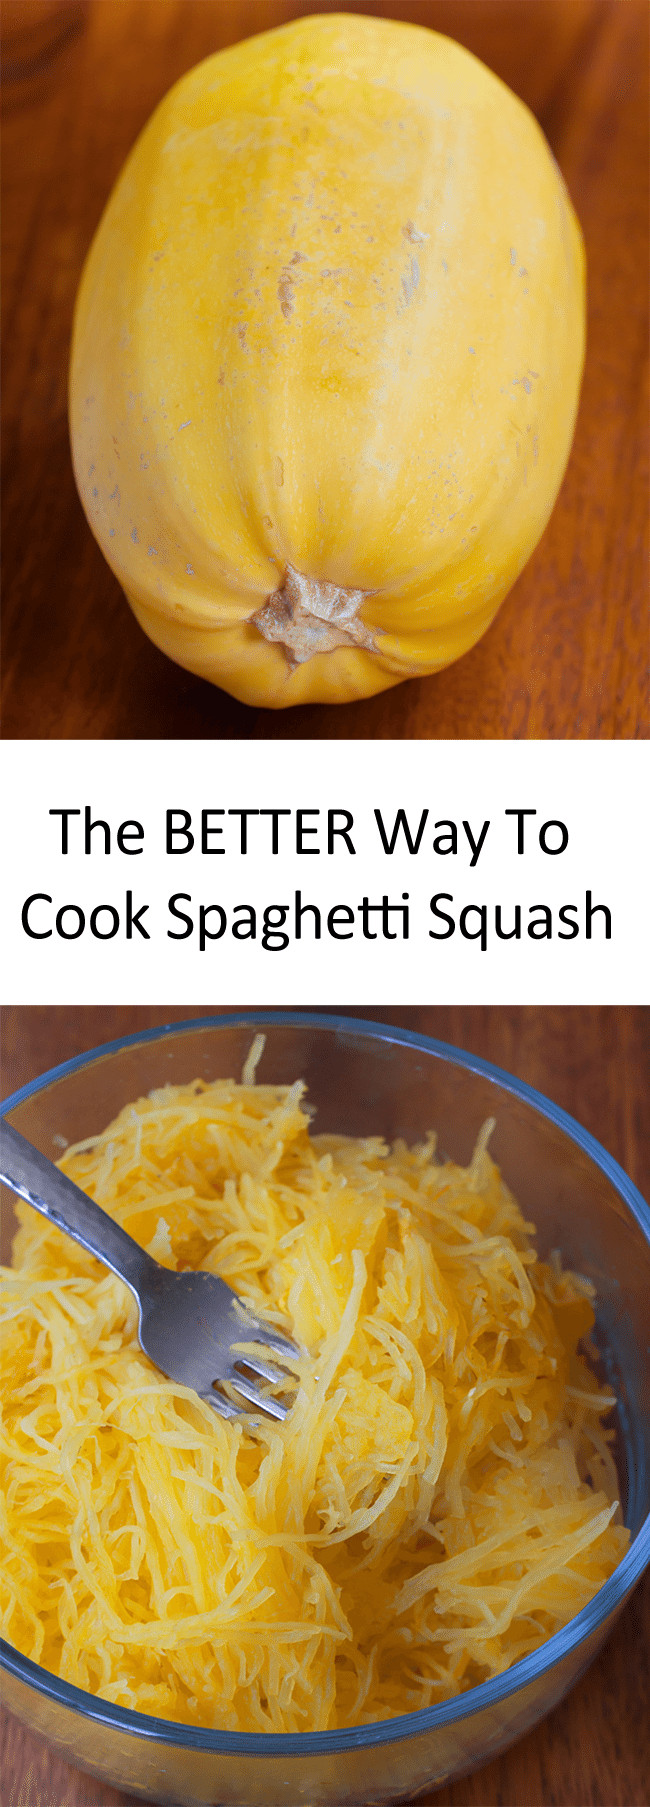 Microwave Spaghetti Squash Whole
 HOW TO MAKE SPAGHETTI SQUASH IN THE OVEN VIDEO